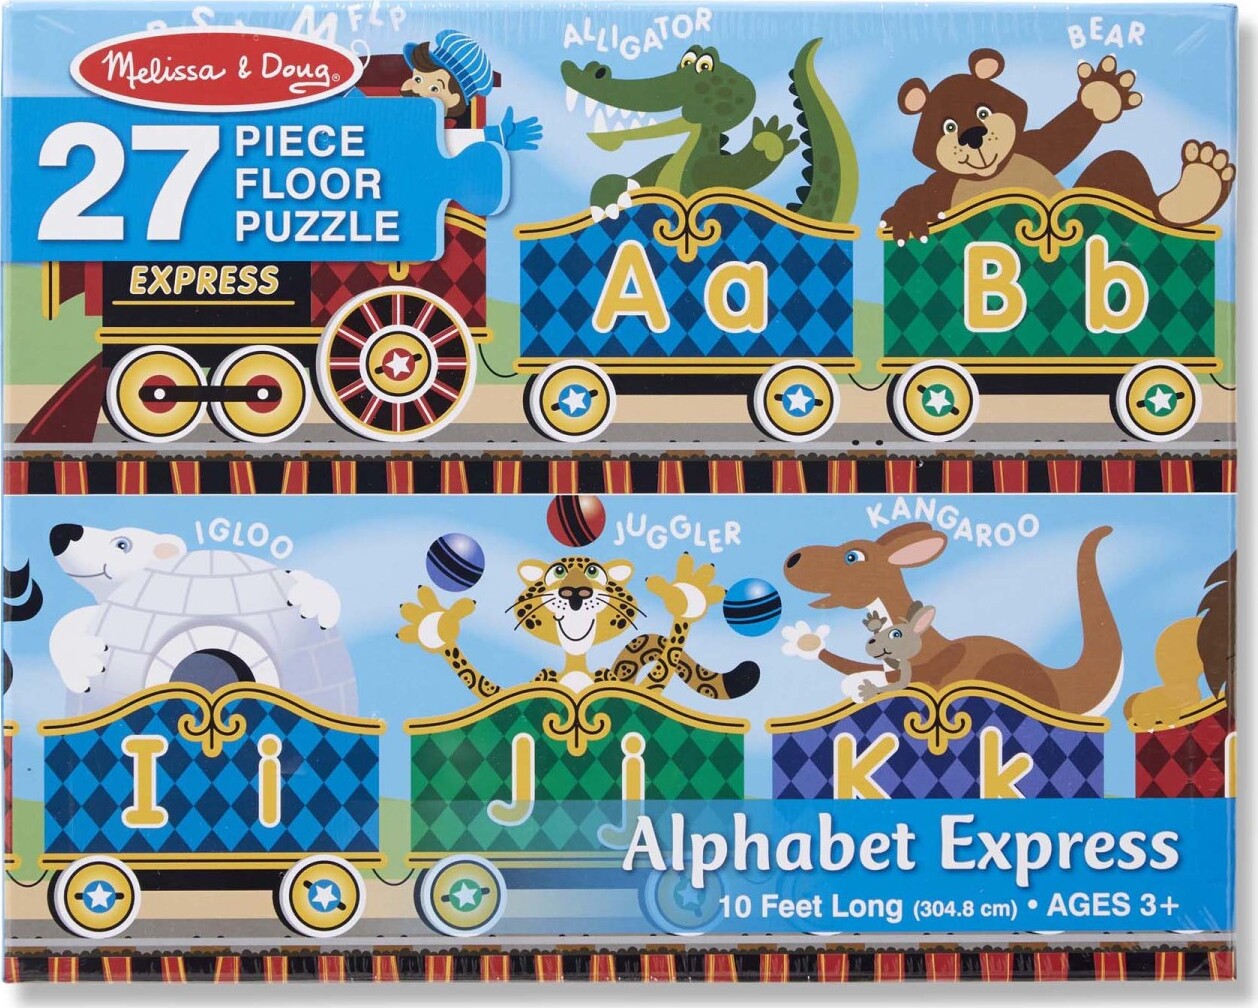 FREE Melissa & Doug Scratch Art Mini-Pad Bundle Alphabet Express 44202 27-Piece Floor Puzzle 